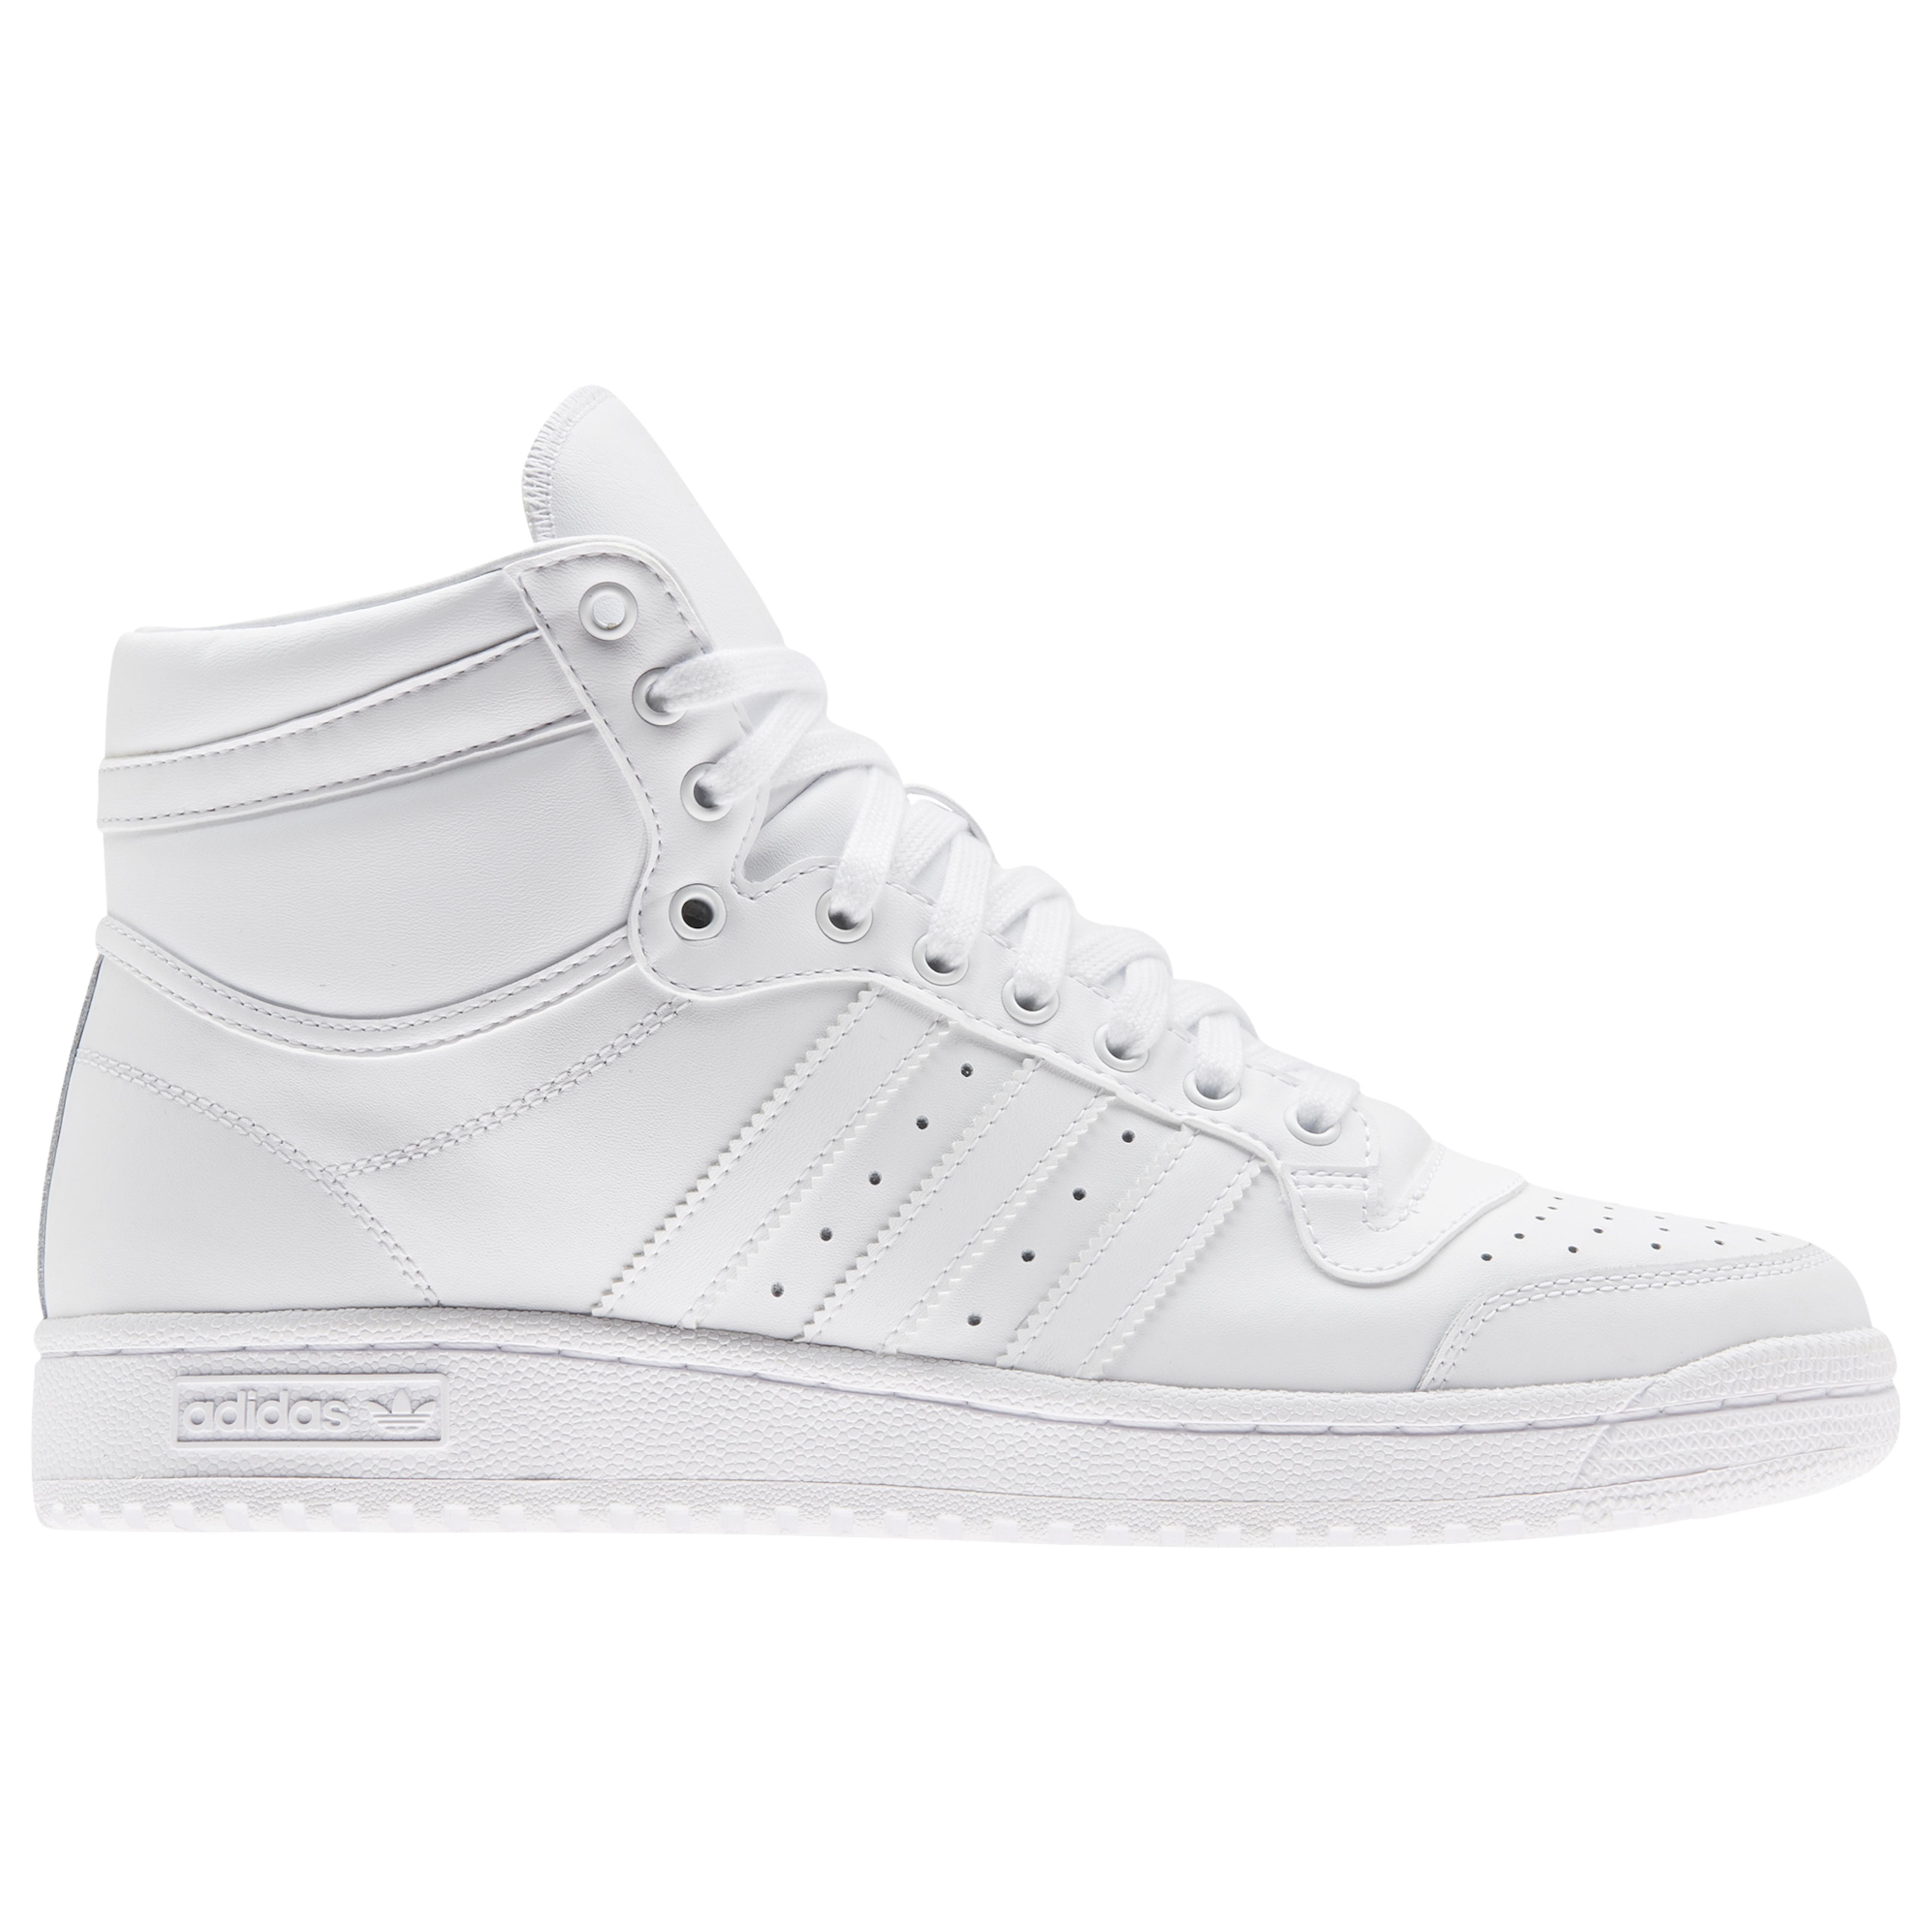 adidas Originals Leather Top Ten Hi in White/Chalk White (White) for ...